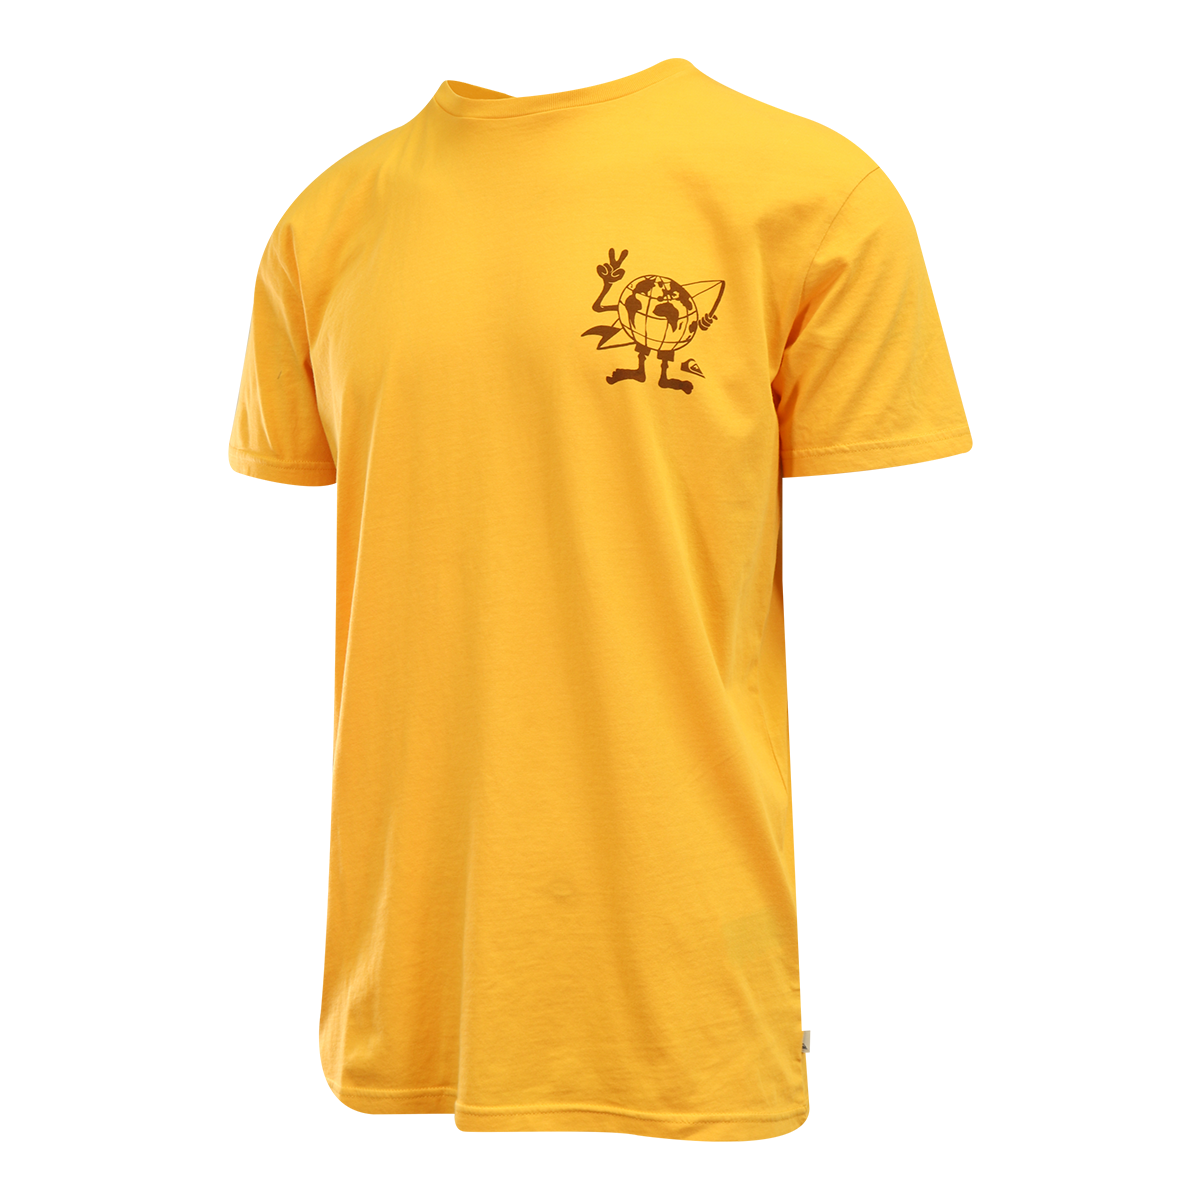 Quiksilver Men's T-Shirt Golden Yellow World Peace Graphic S/S (S11)